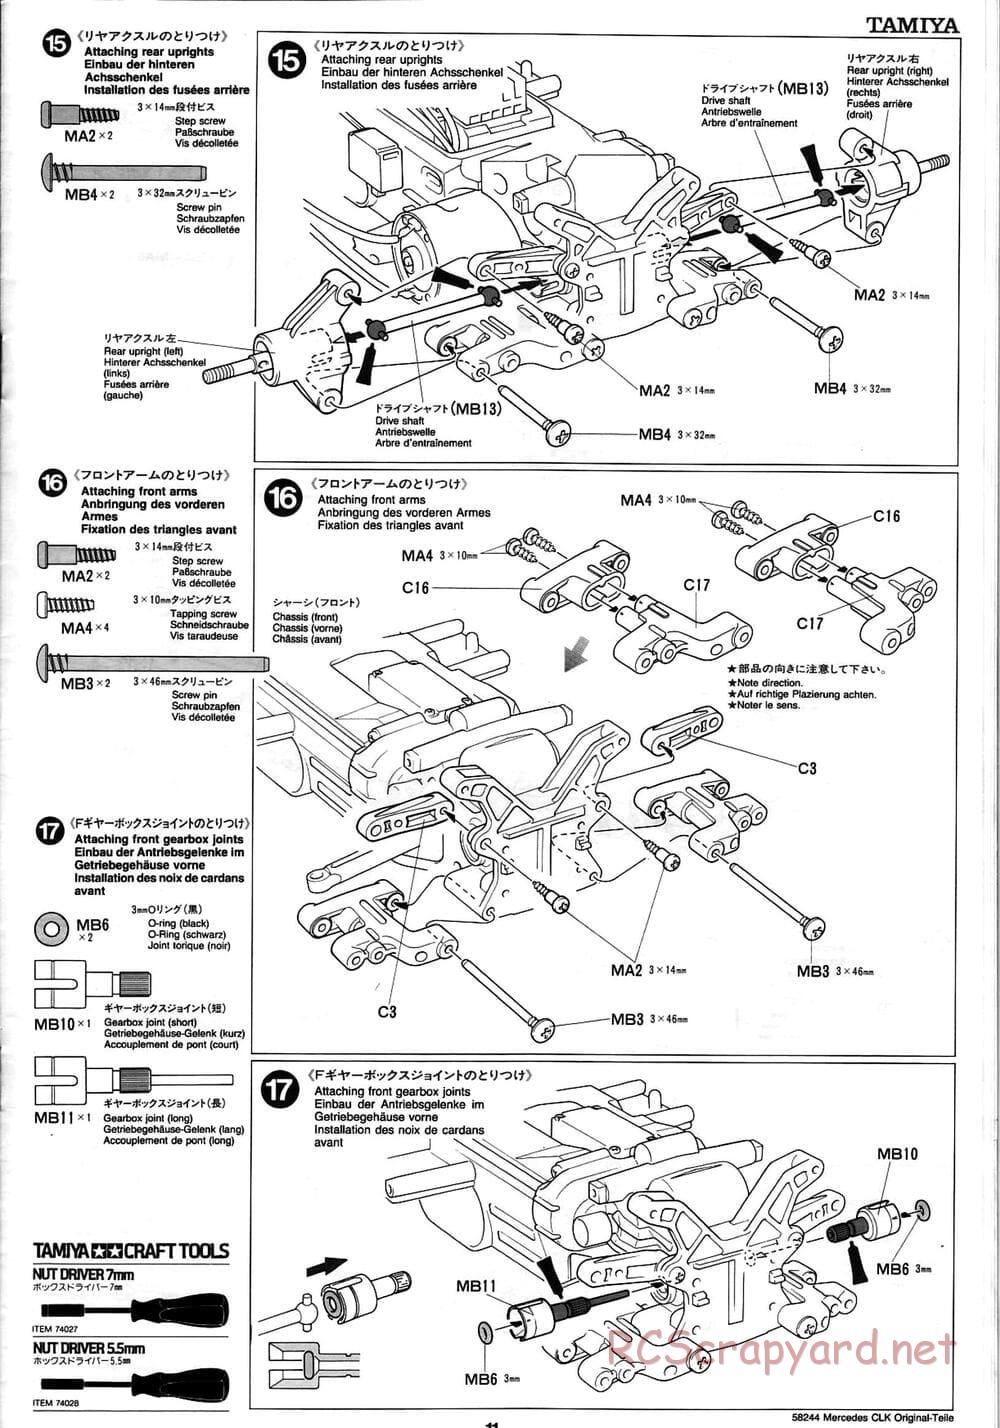 Tamiya - Mercedes CLK-GTR Original-Teile - TL-01 Chassis - Manual - Page 11